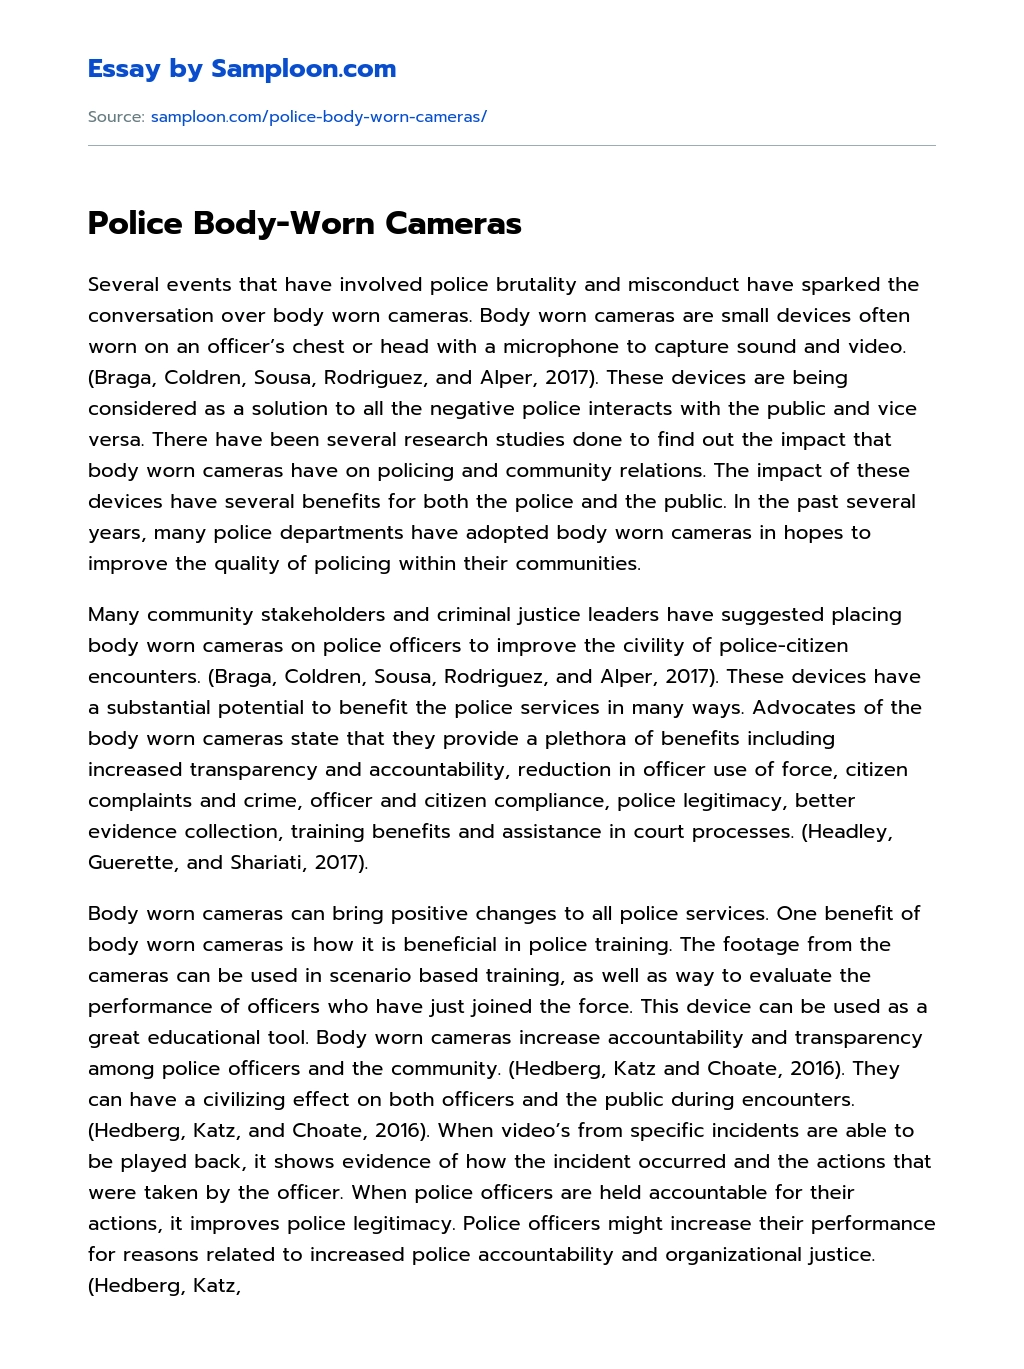 Police Body-Worn Cameras essay